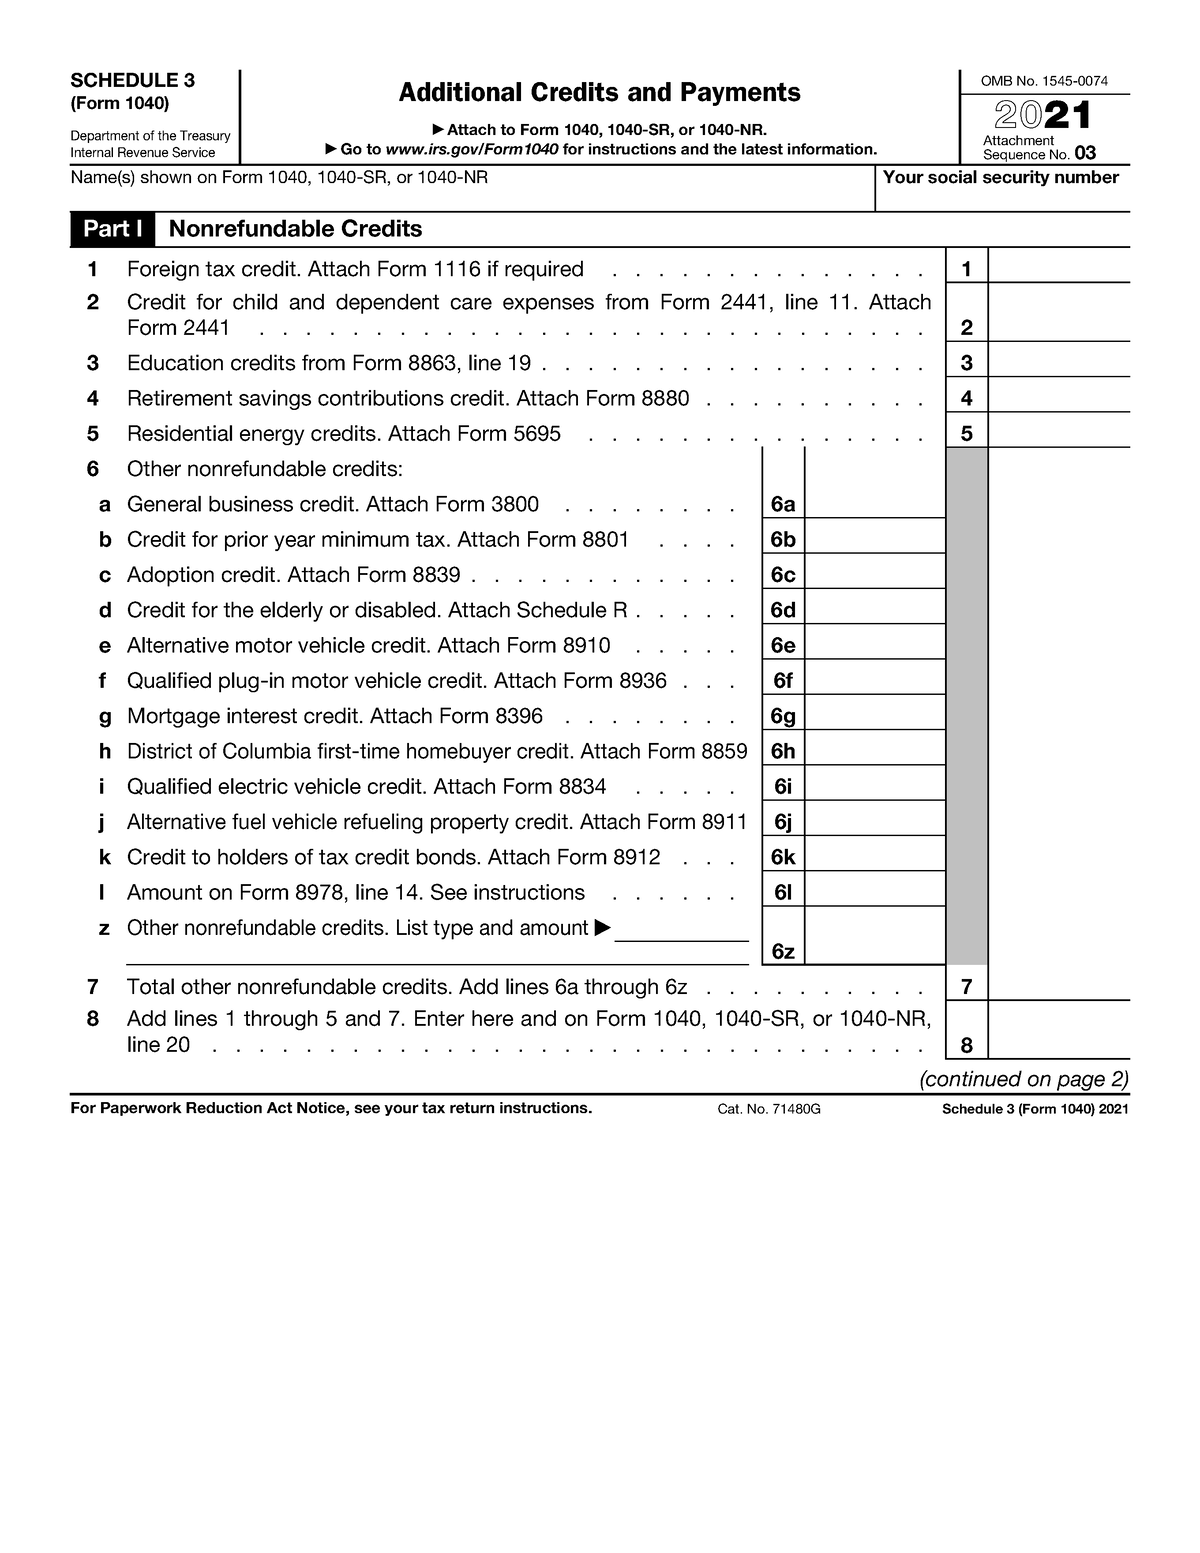 Form 1040 Schedule 3 final form SCHEDULE 3 (Form 1040) 2021